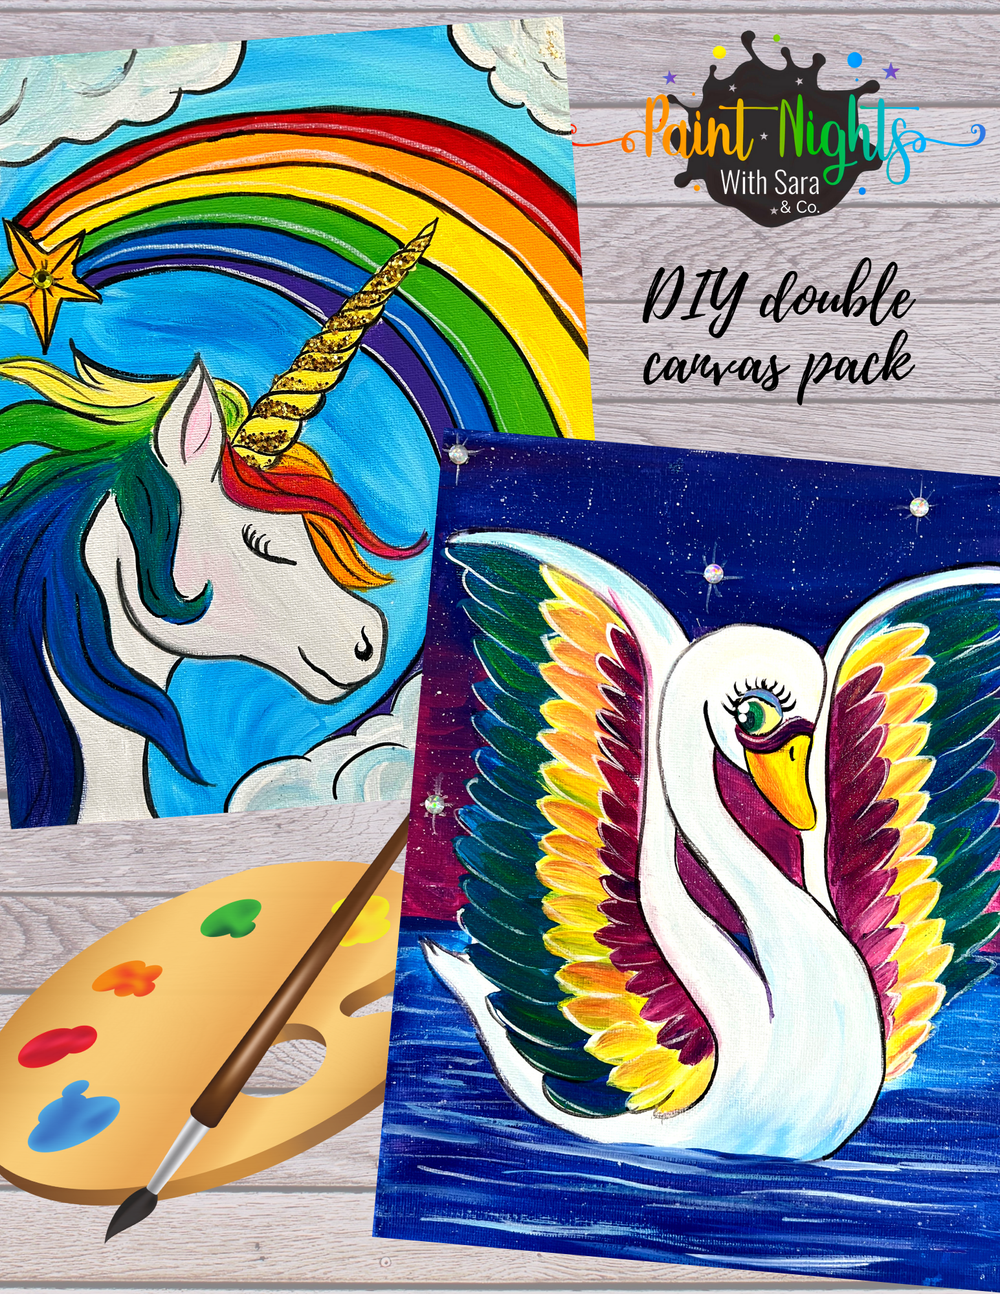 Lisa Frank Inspired Unicorn 2 – Piece by Piece - Diamond Paint Therapy